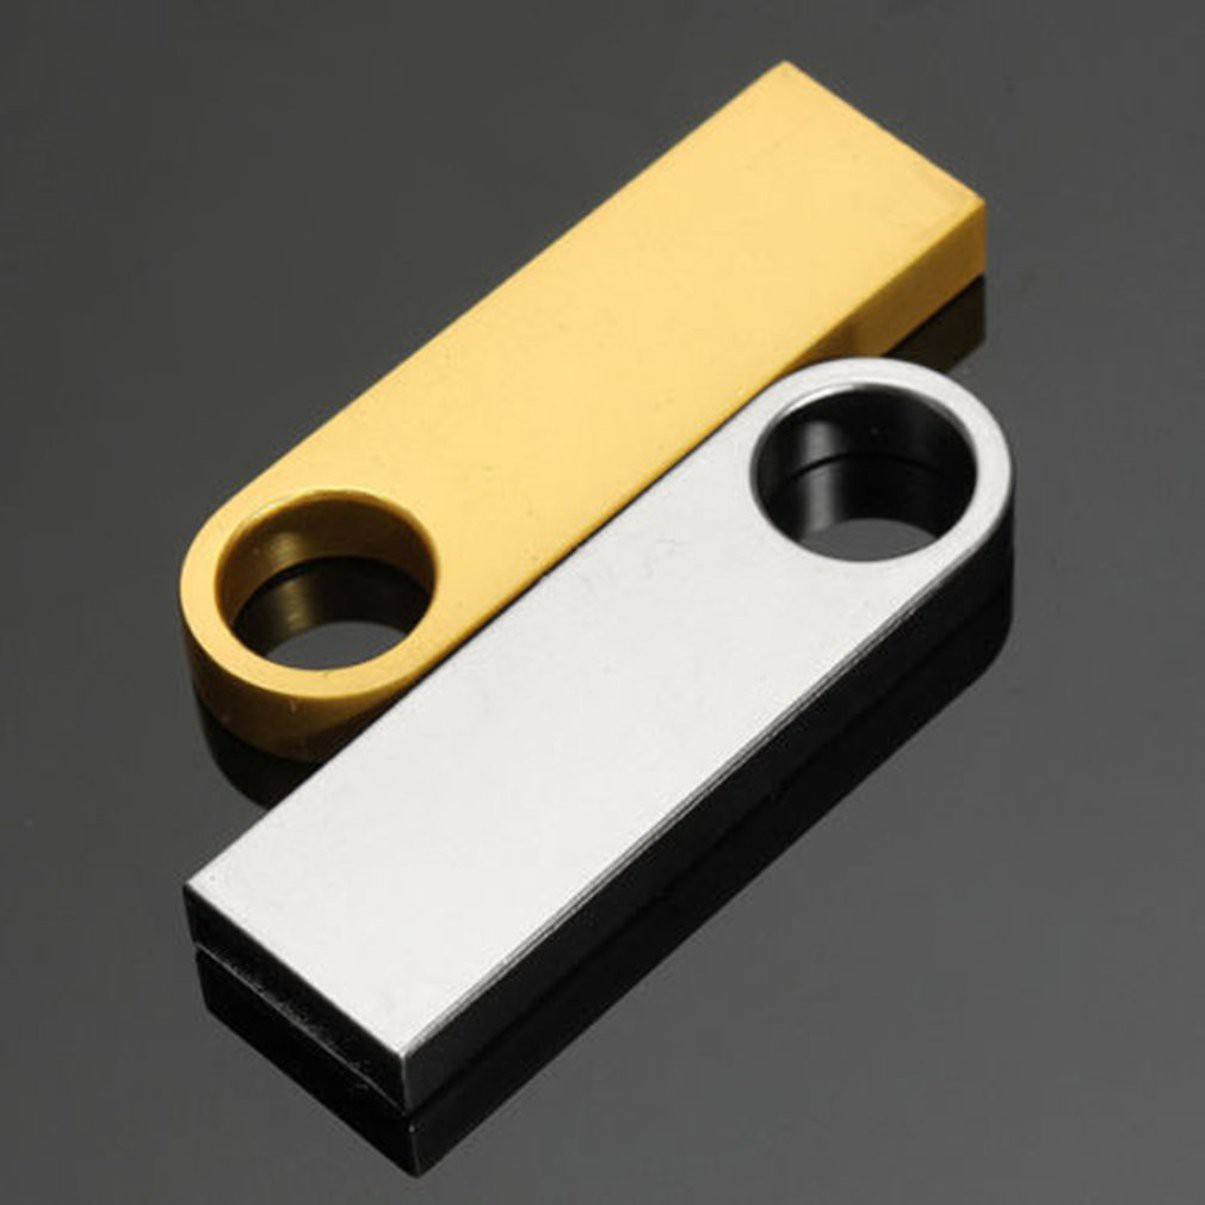 Portable Key Ring USB 2.0 Flash Drives Memory Stick Pen for Laptops Notebook